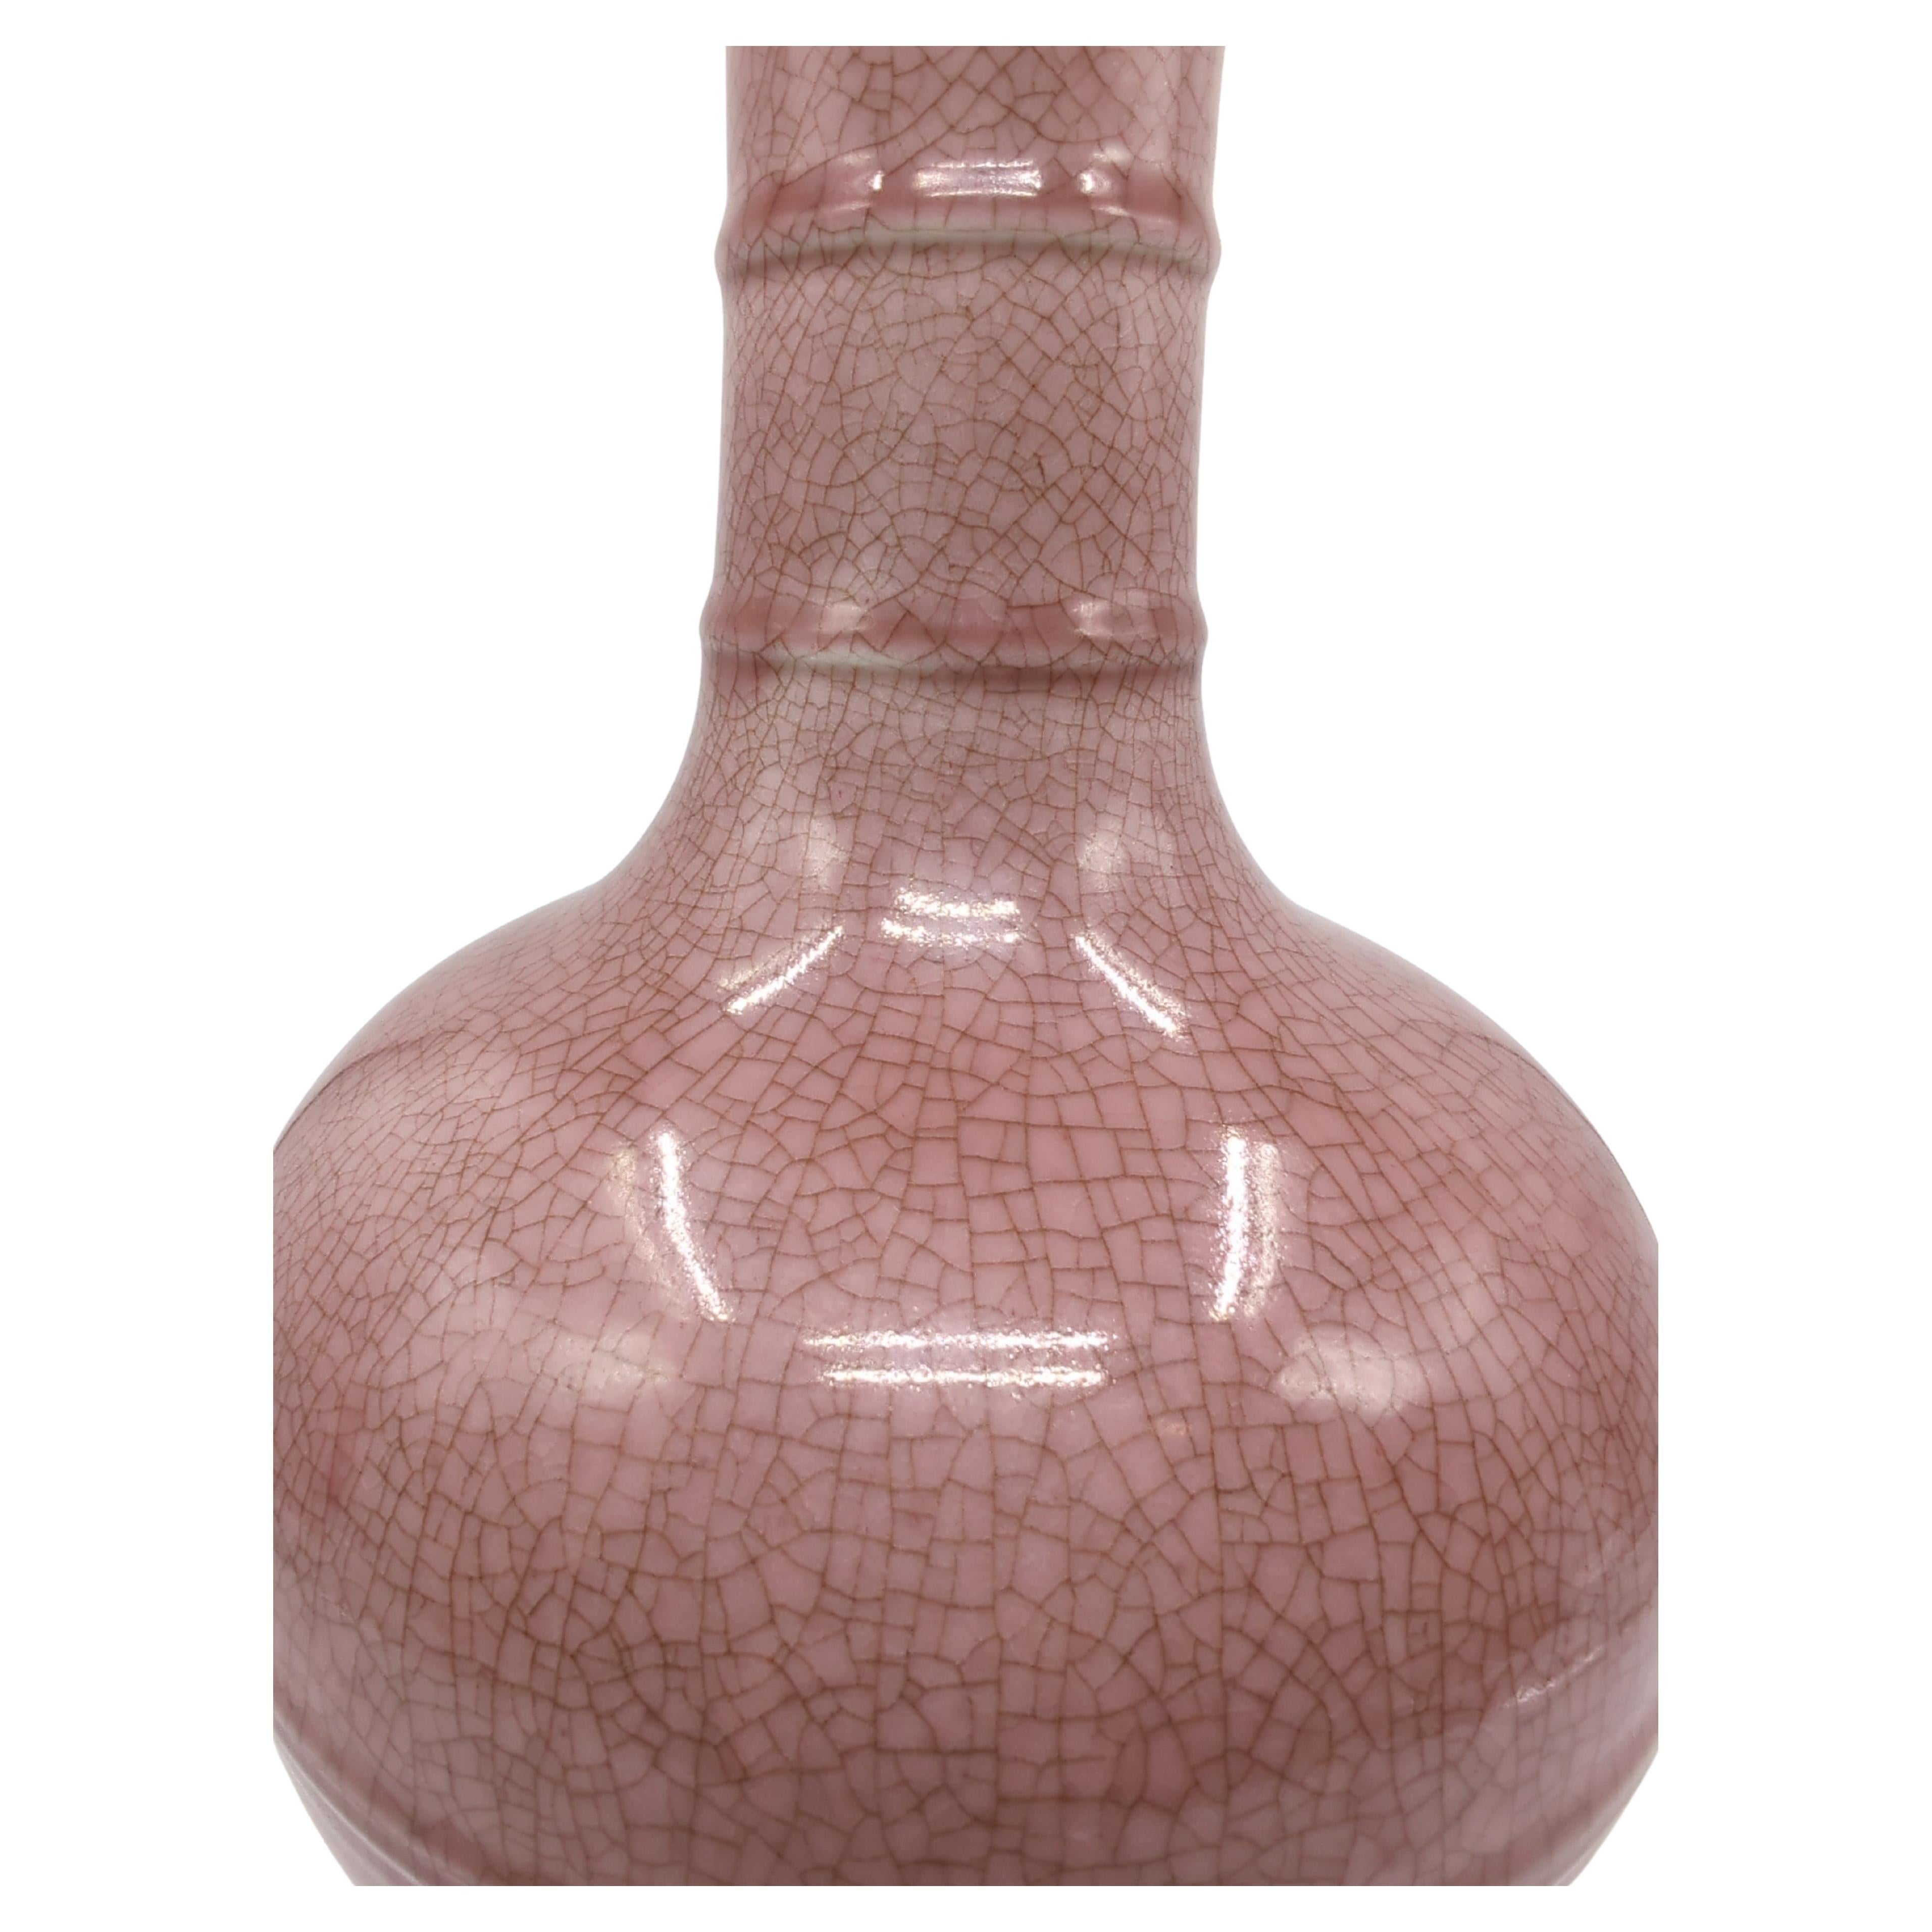 Large Chinese Porcelain Monochrome Peachbloom Crackle Glaze Vase Wood Stand 20c For Sale 2